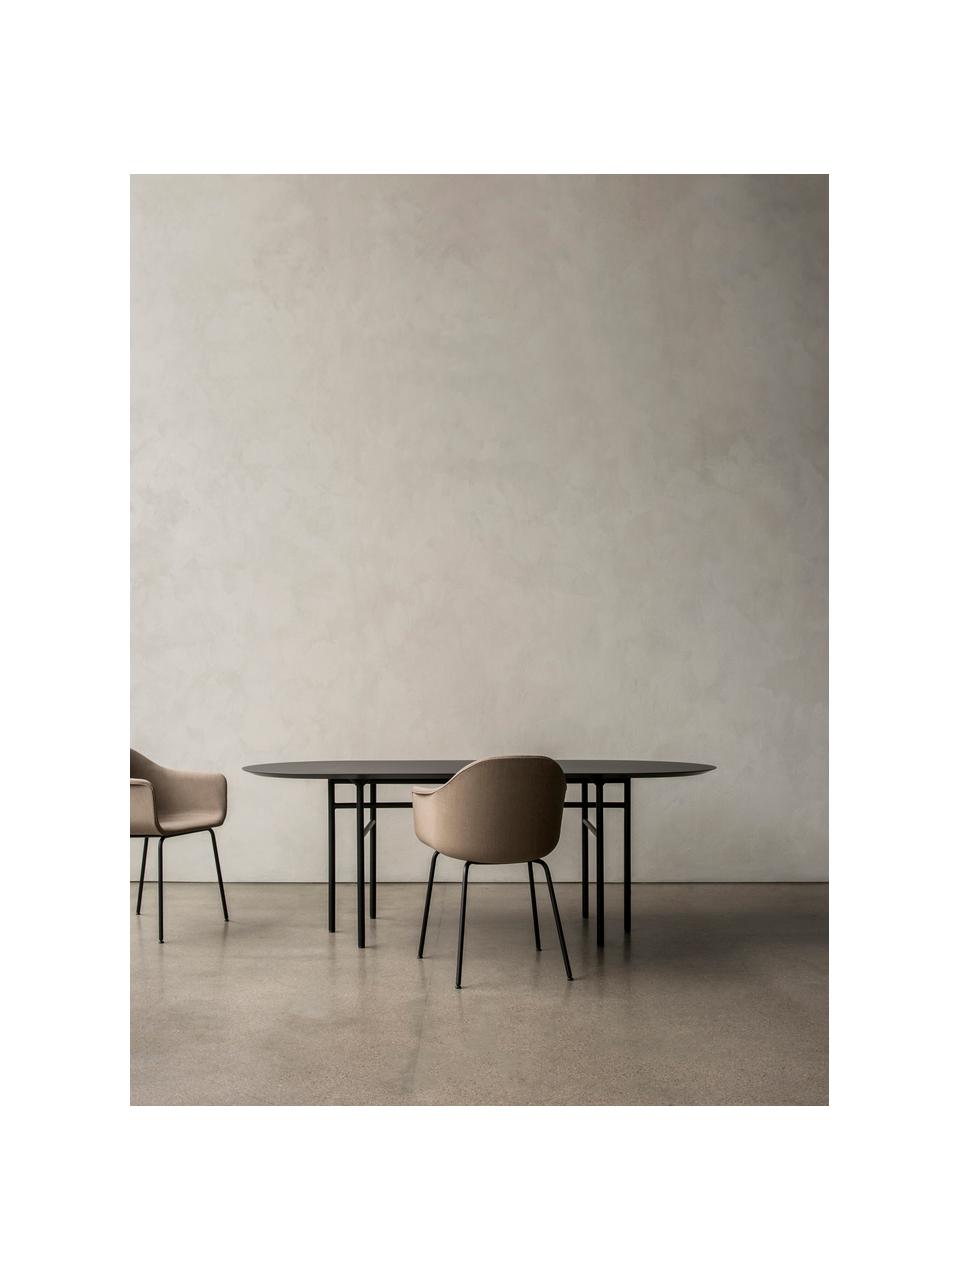 Oválny jedálenský stôl Snaregade, 210 x 95 cm, Antracitová, čierna matná, Š 210 x H 95 cm